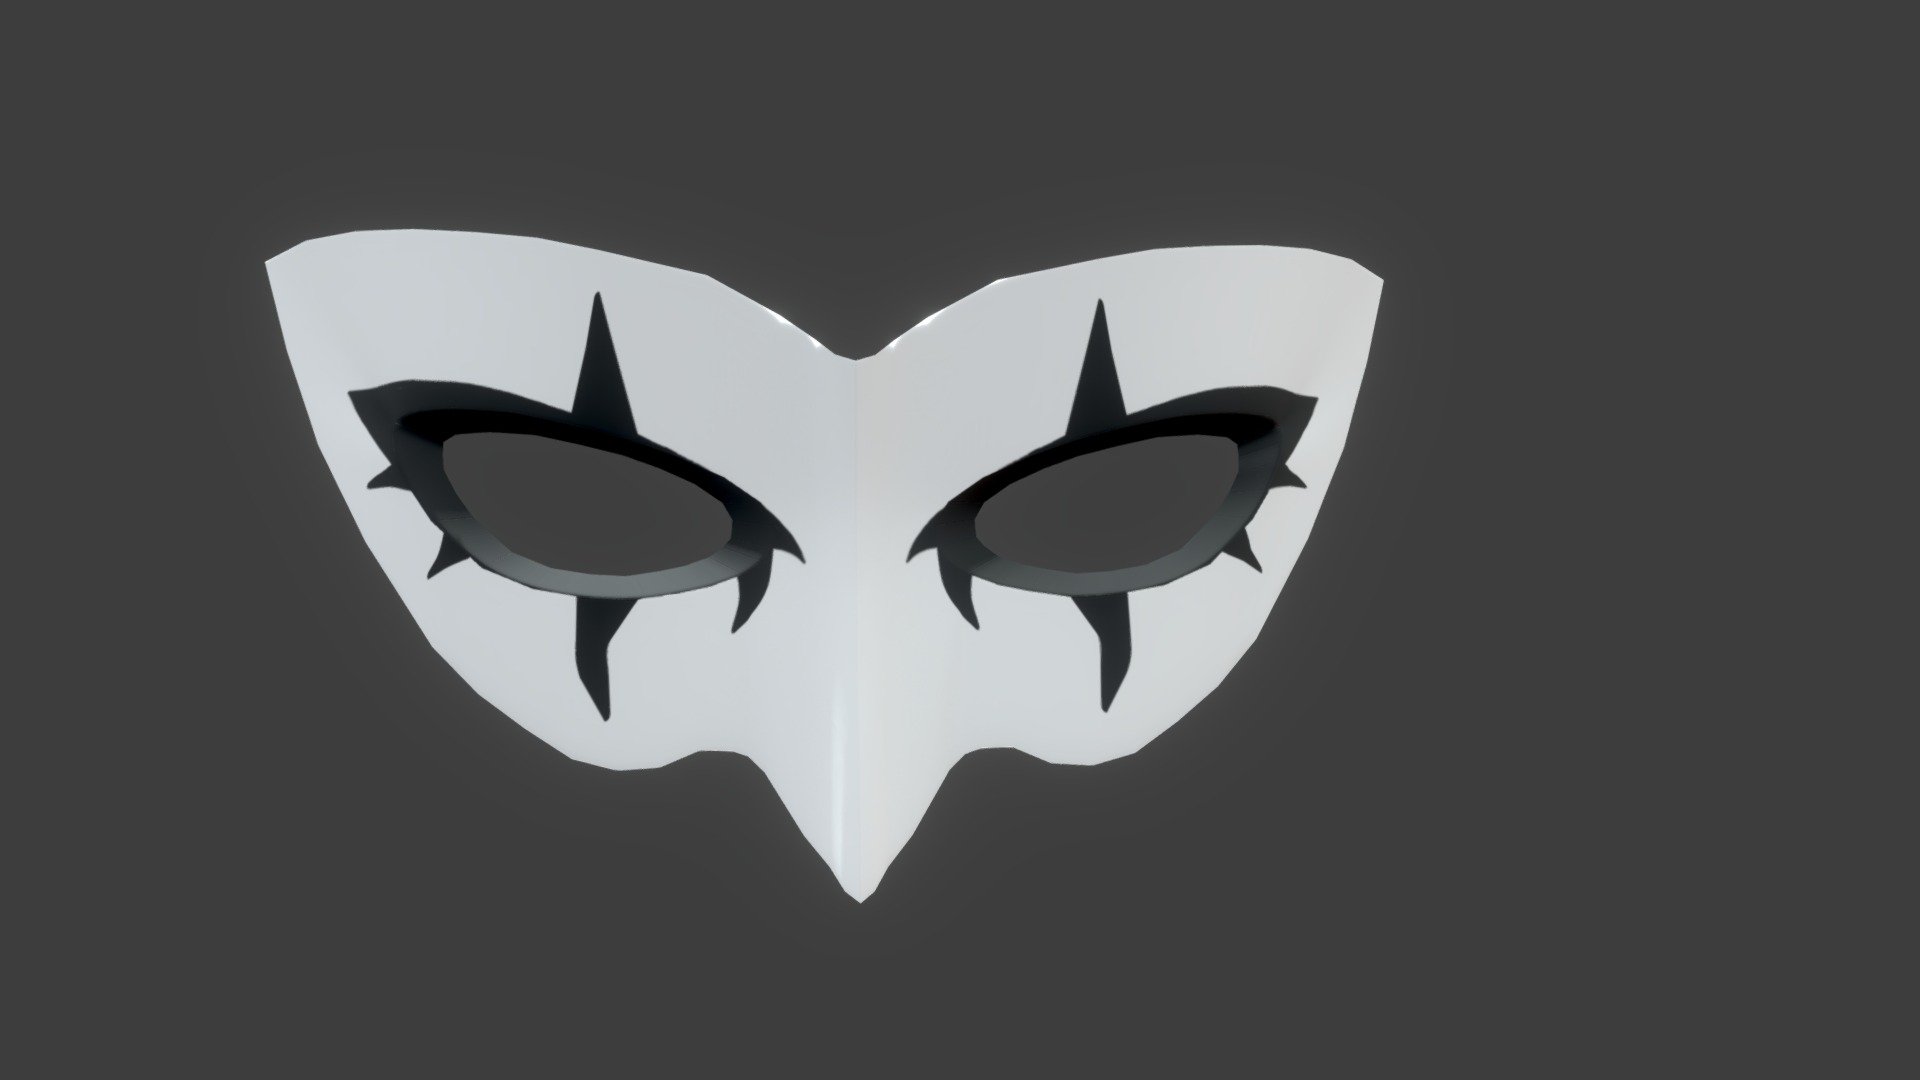 3D Model of Joker's mask from Persona 5 - Joker's Mask - Persona 5 - Download Free 3D model by DarkTenshiDT 3d model